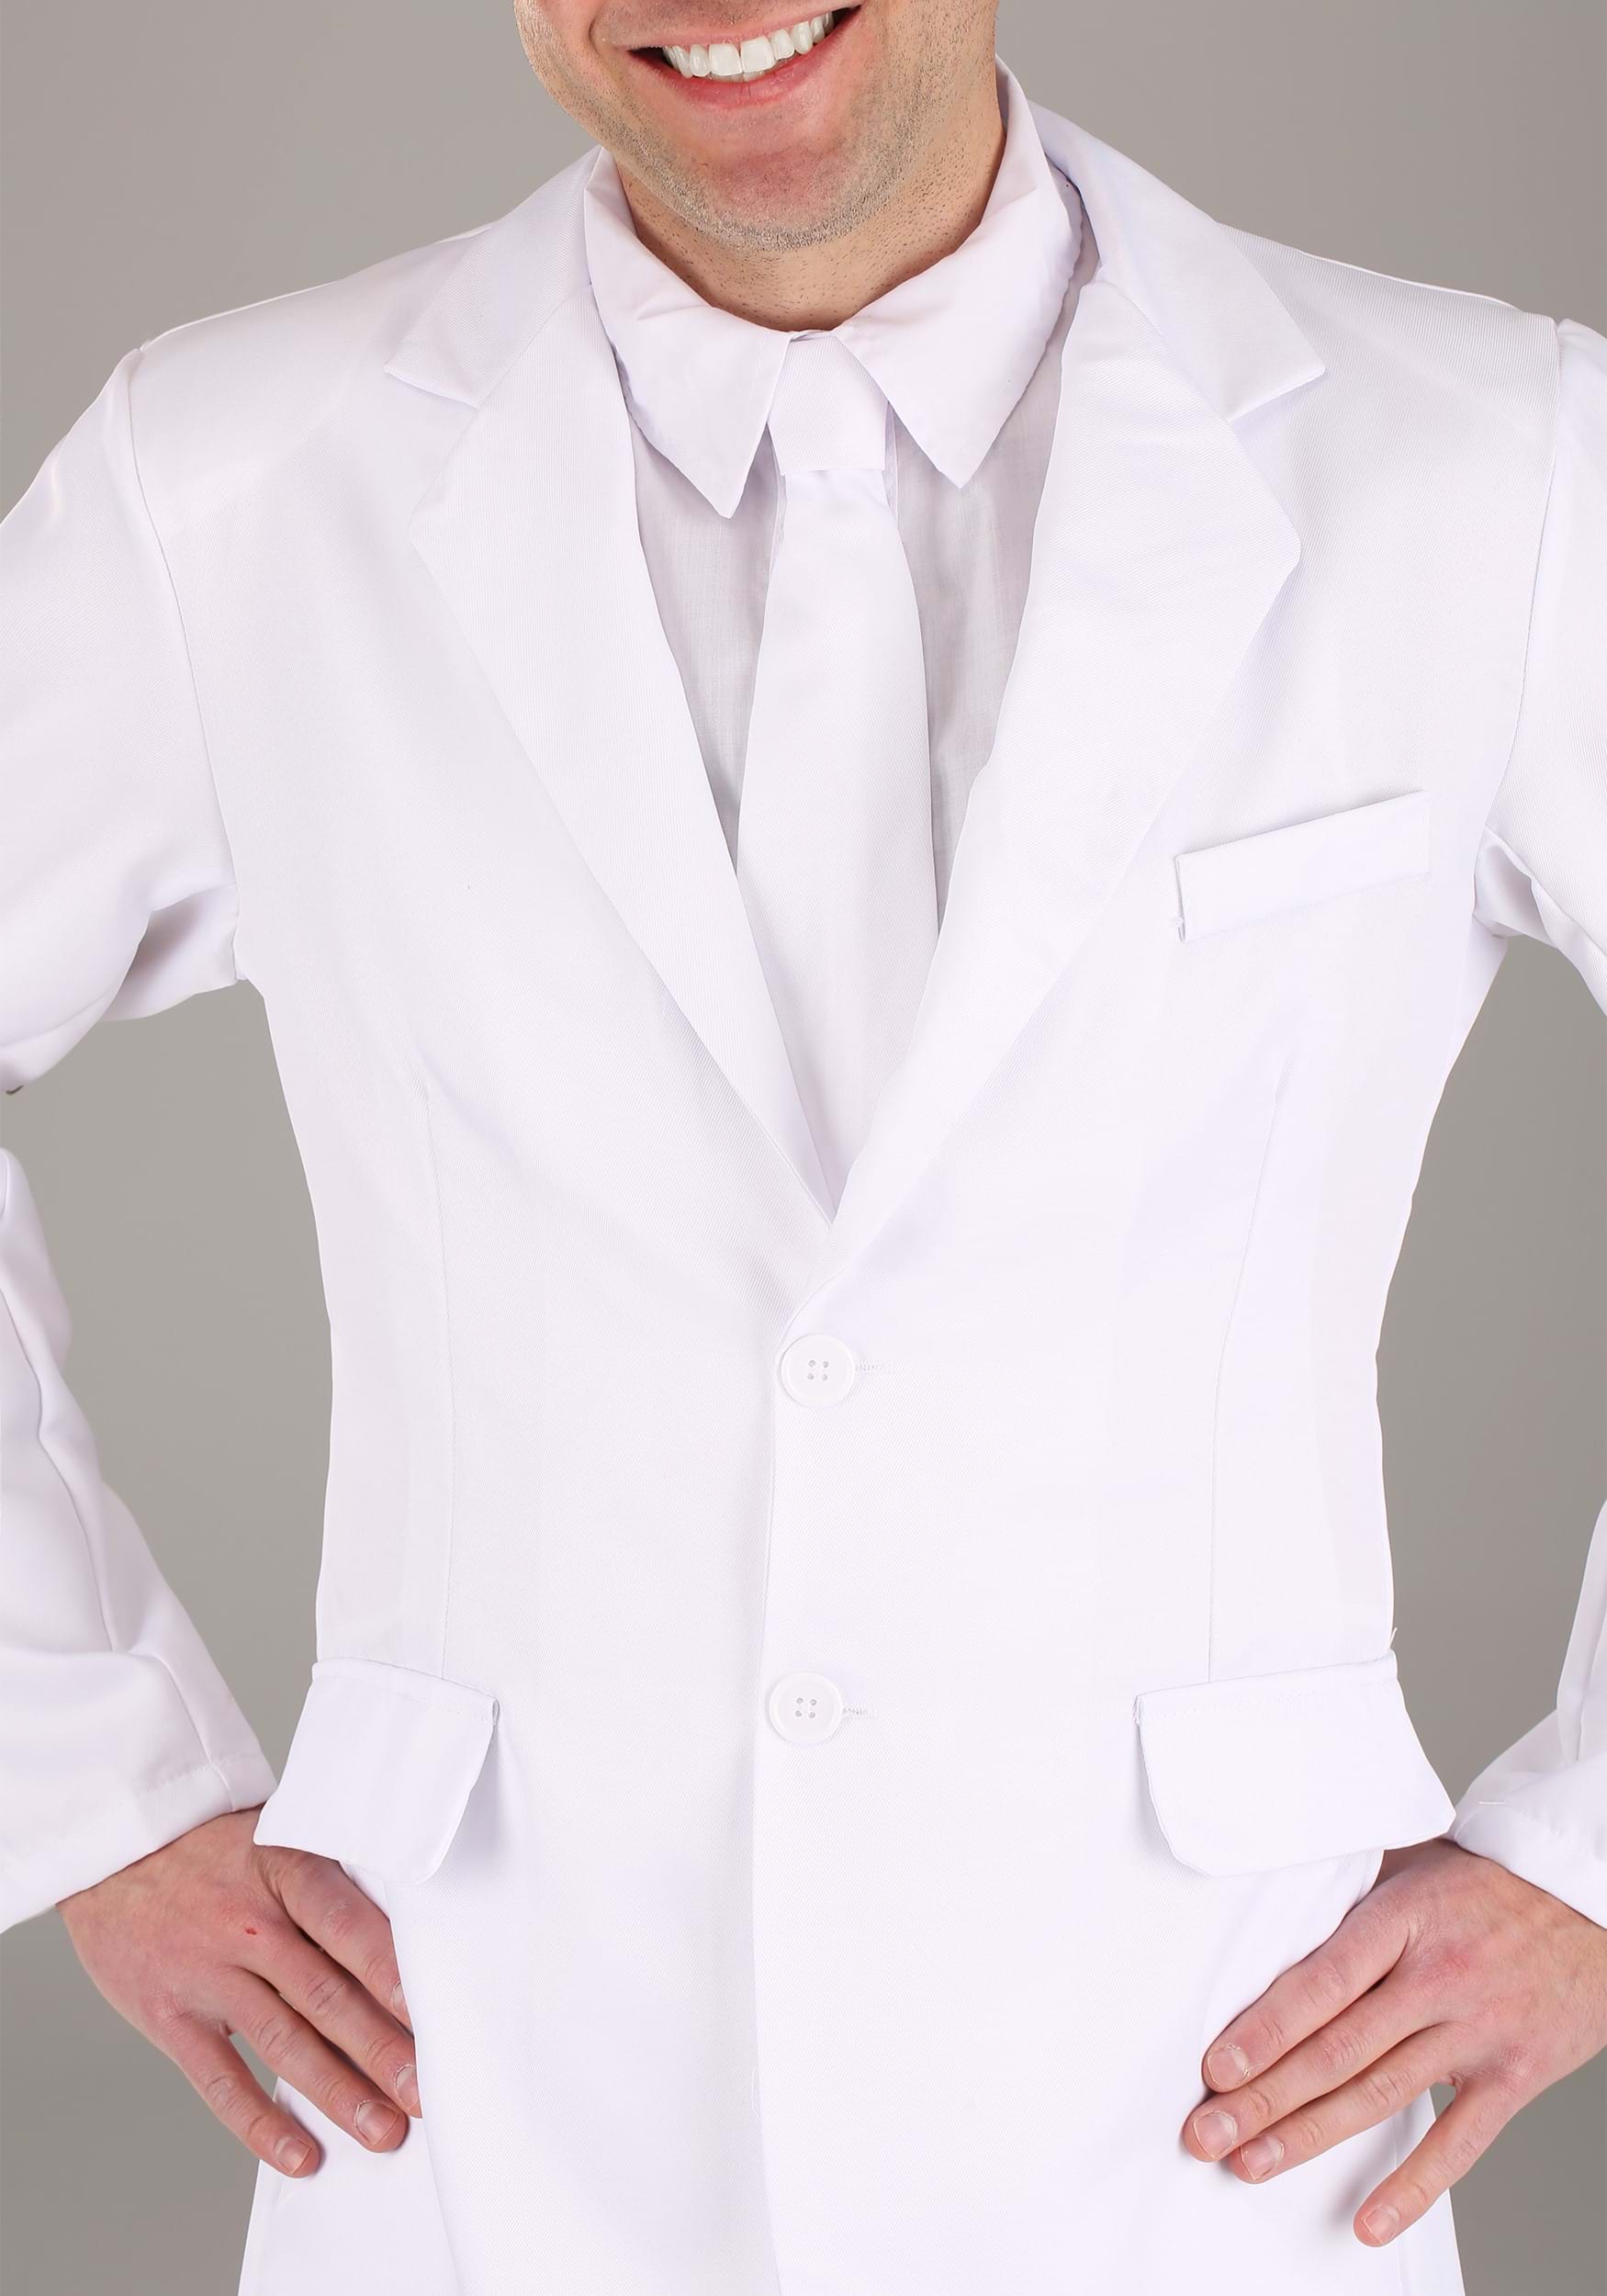 White Fancy Dress Costume Suit For Men , 1920s Mobster Fancy Dress Costume